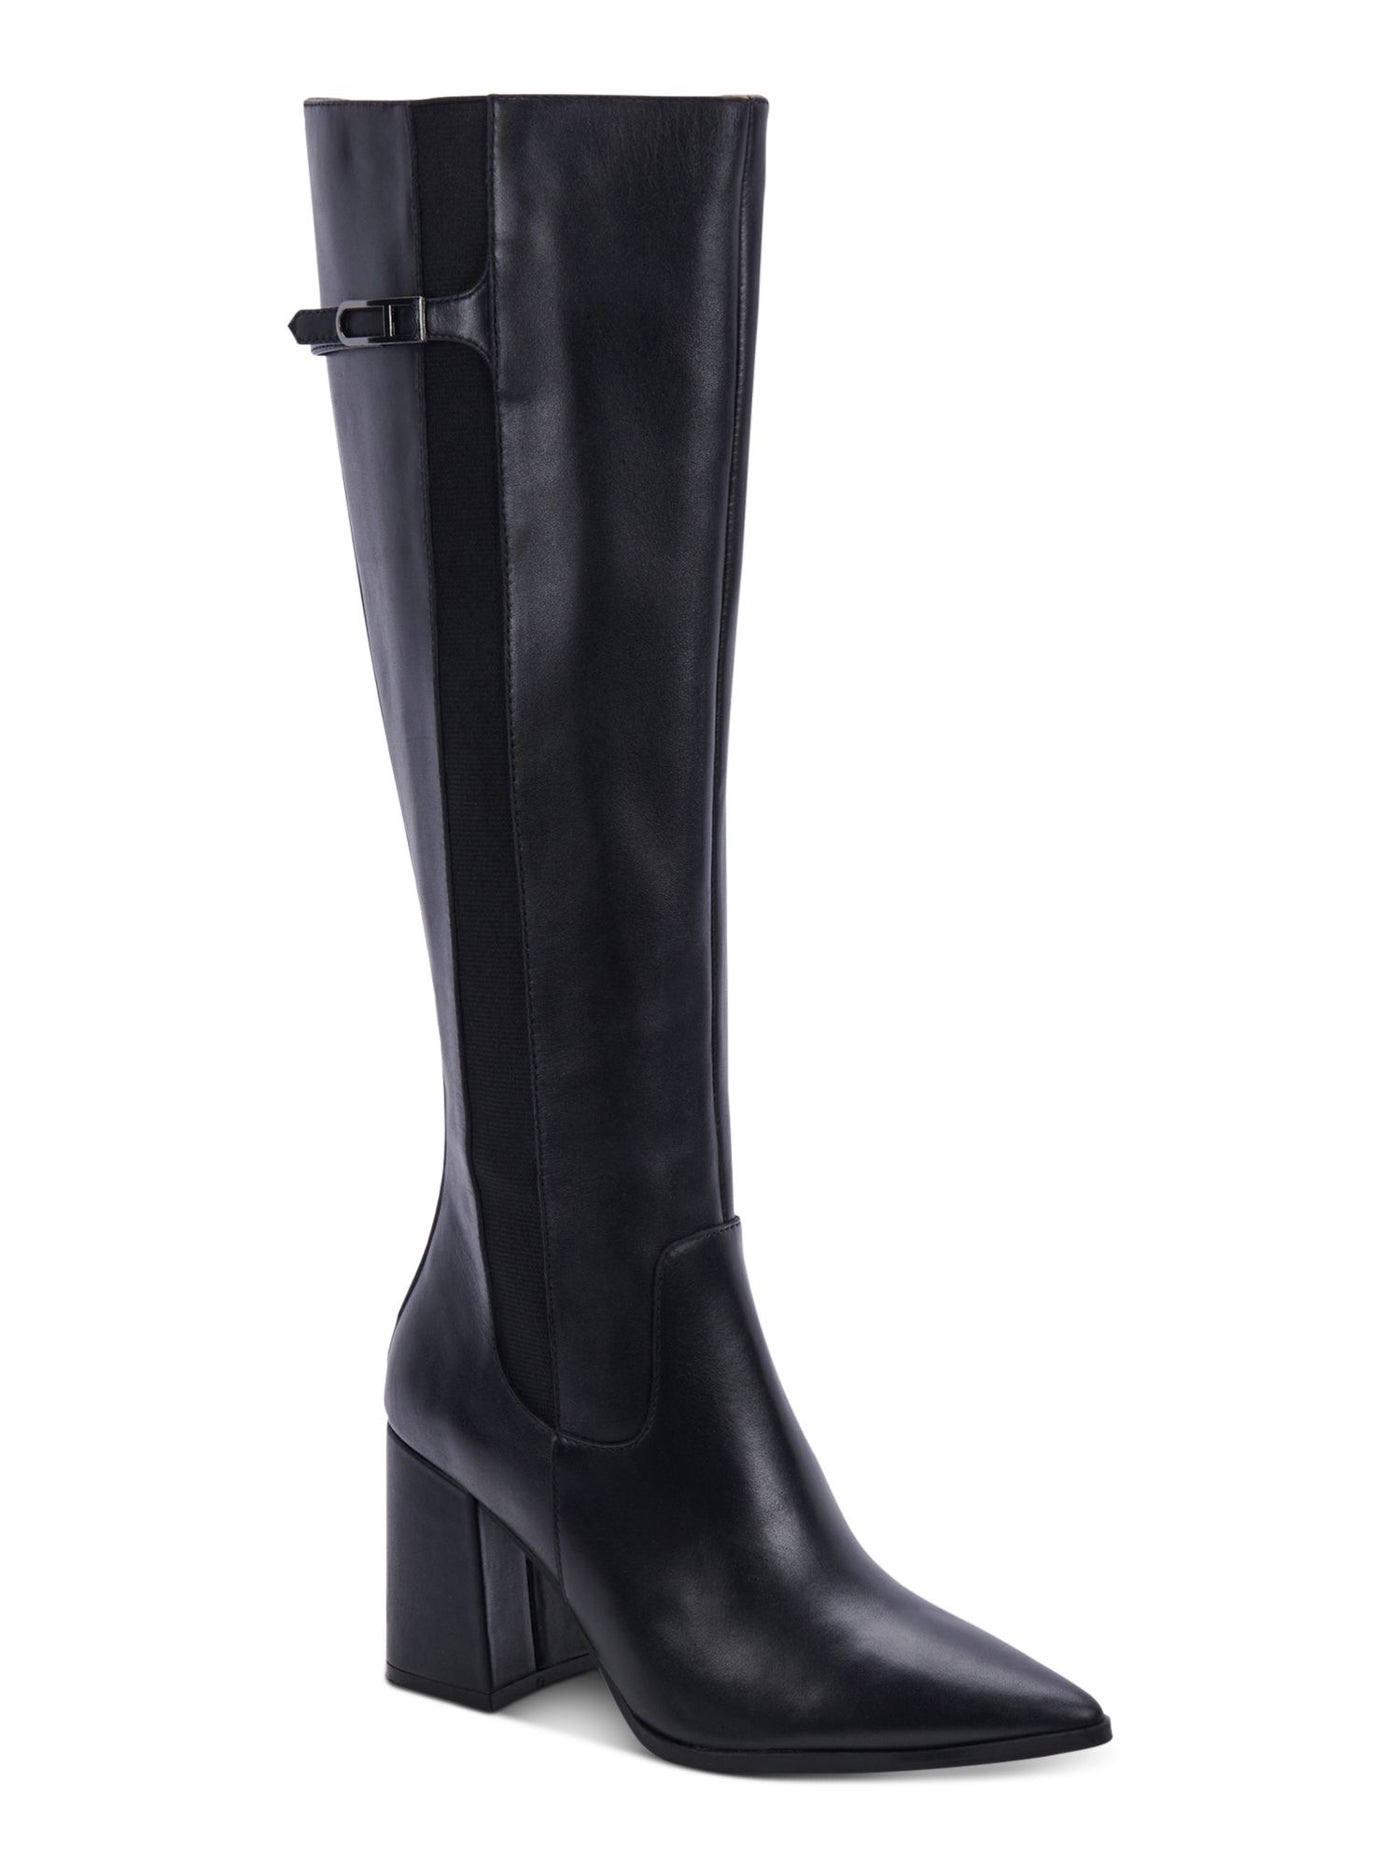 AQUA COLLEGE Womens Black Slip Resistant Water Resistant Ireland Pointed Toe Stacked Heel Zip-Up Heeled Boots 10 M